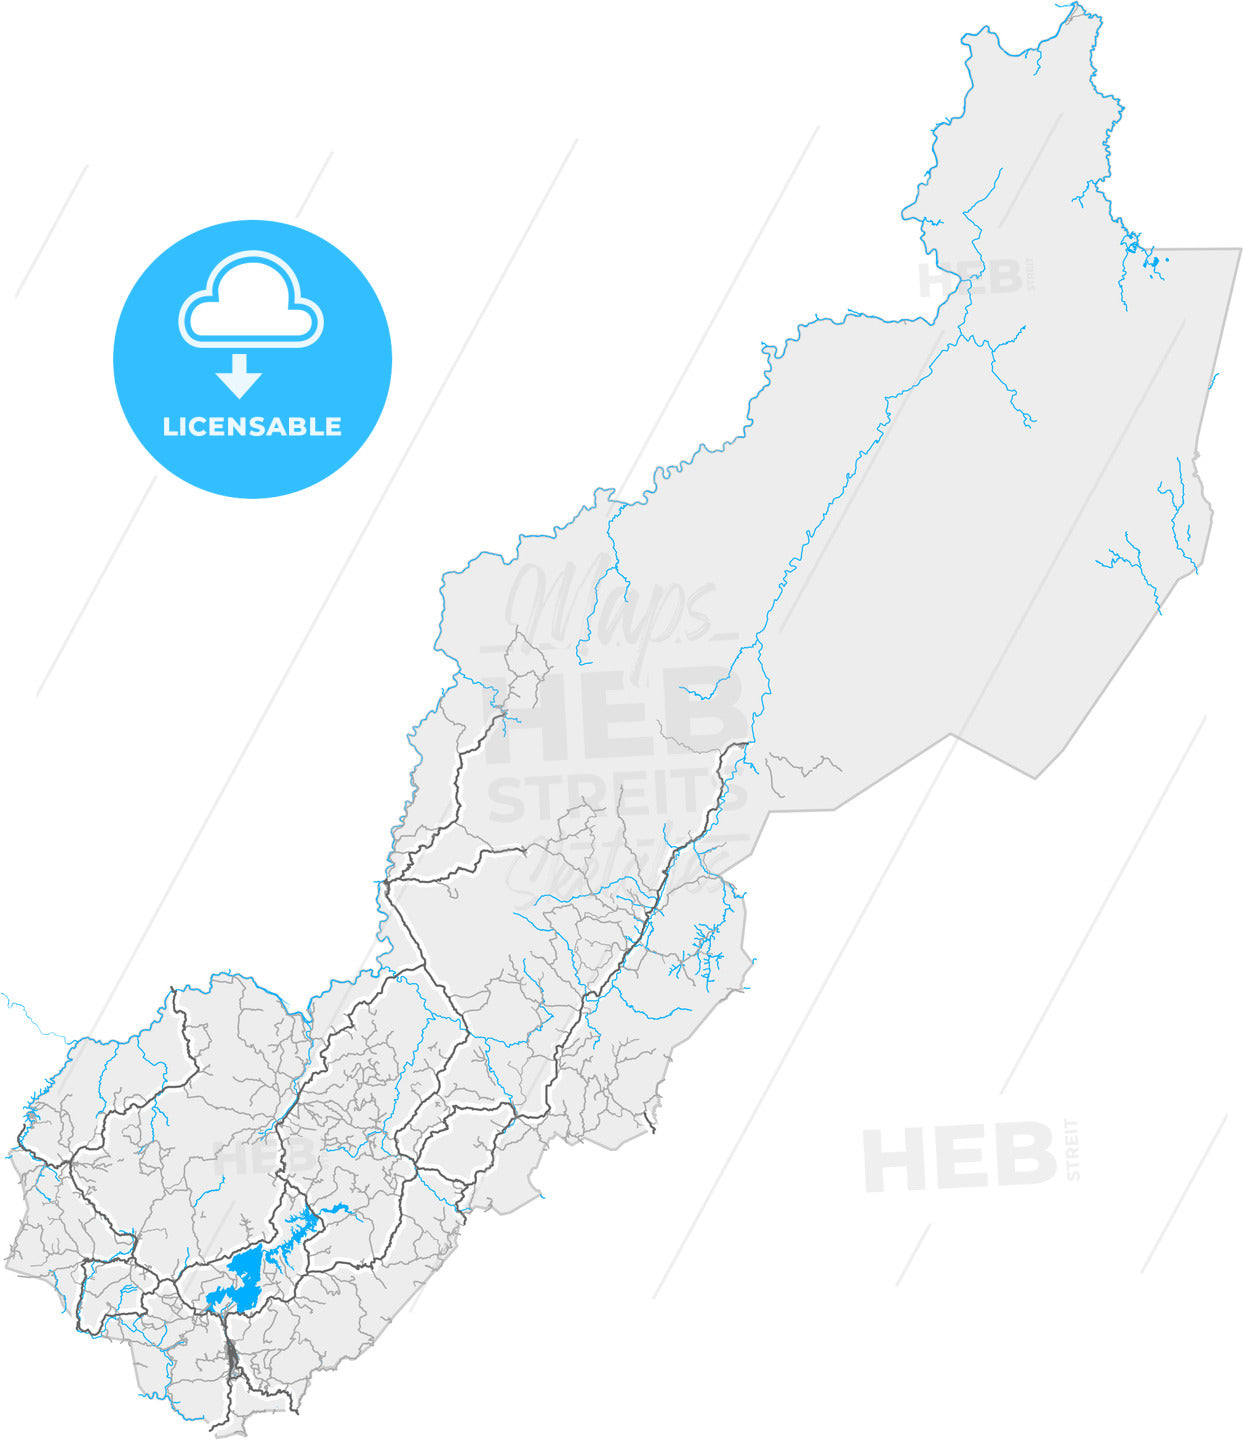 Jinotega, Jinotega, Nicaragua, high quality vector map